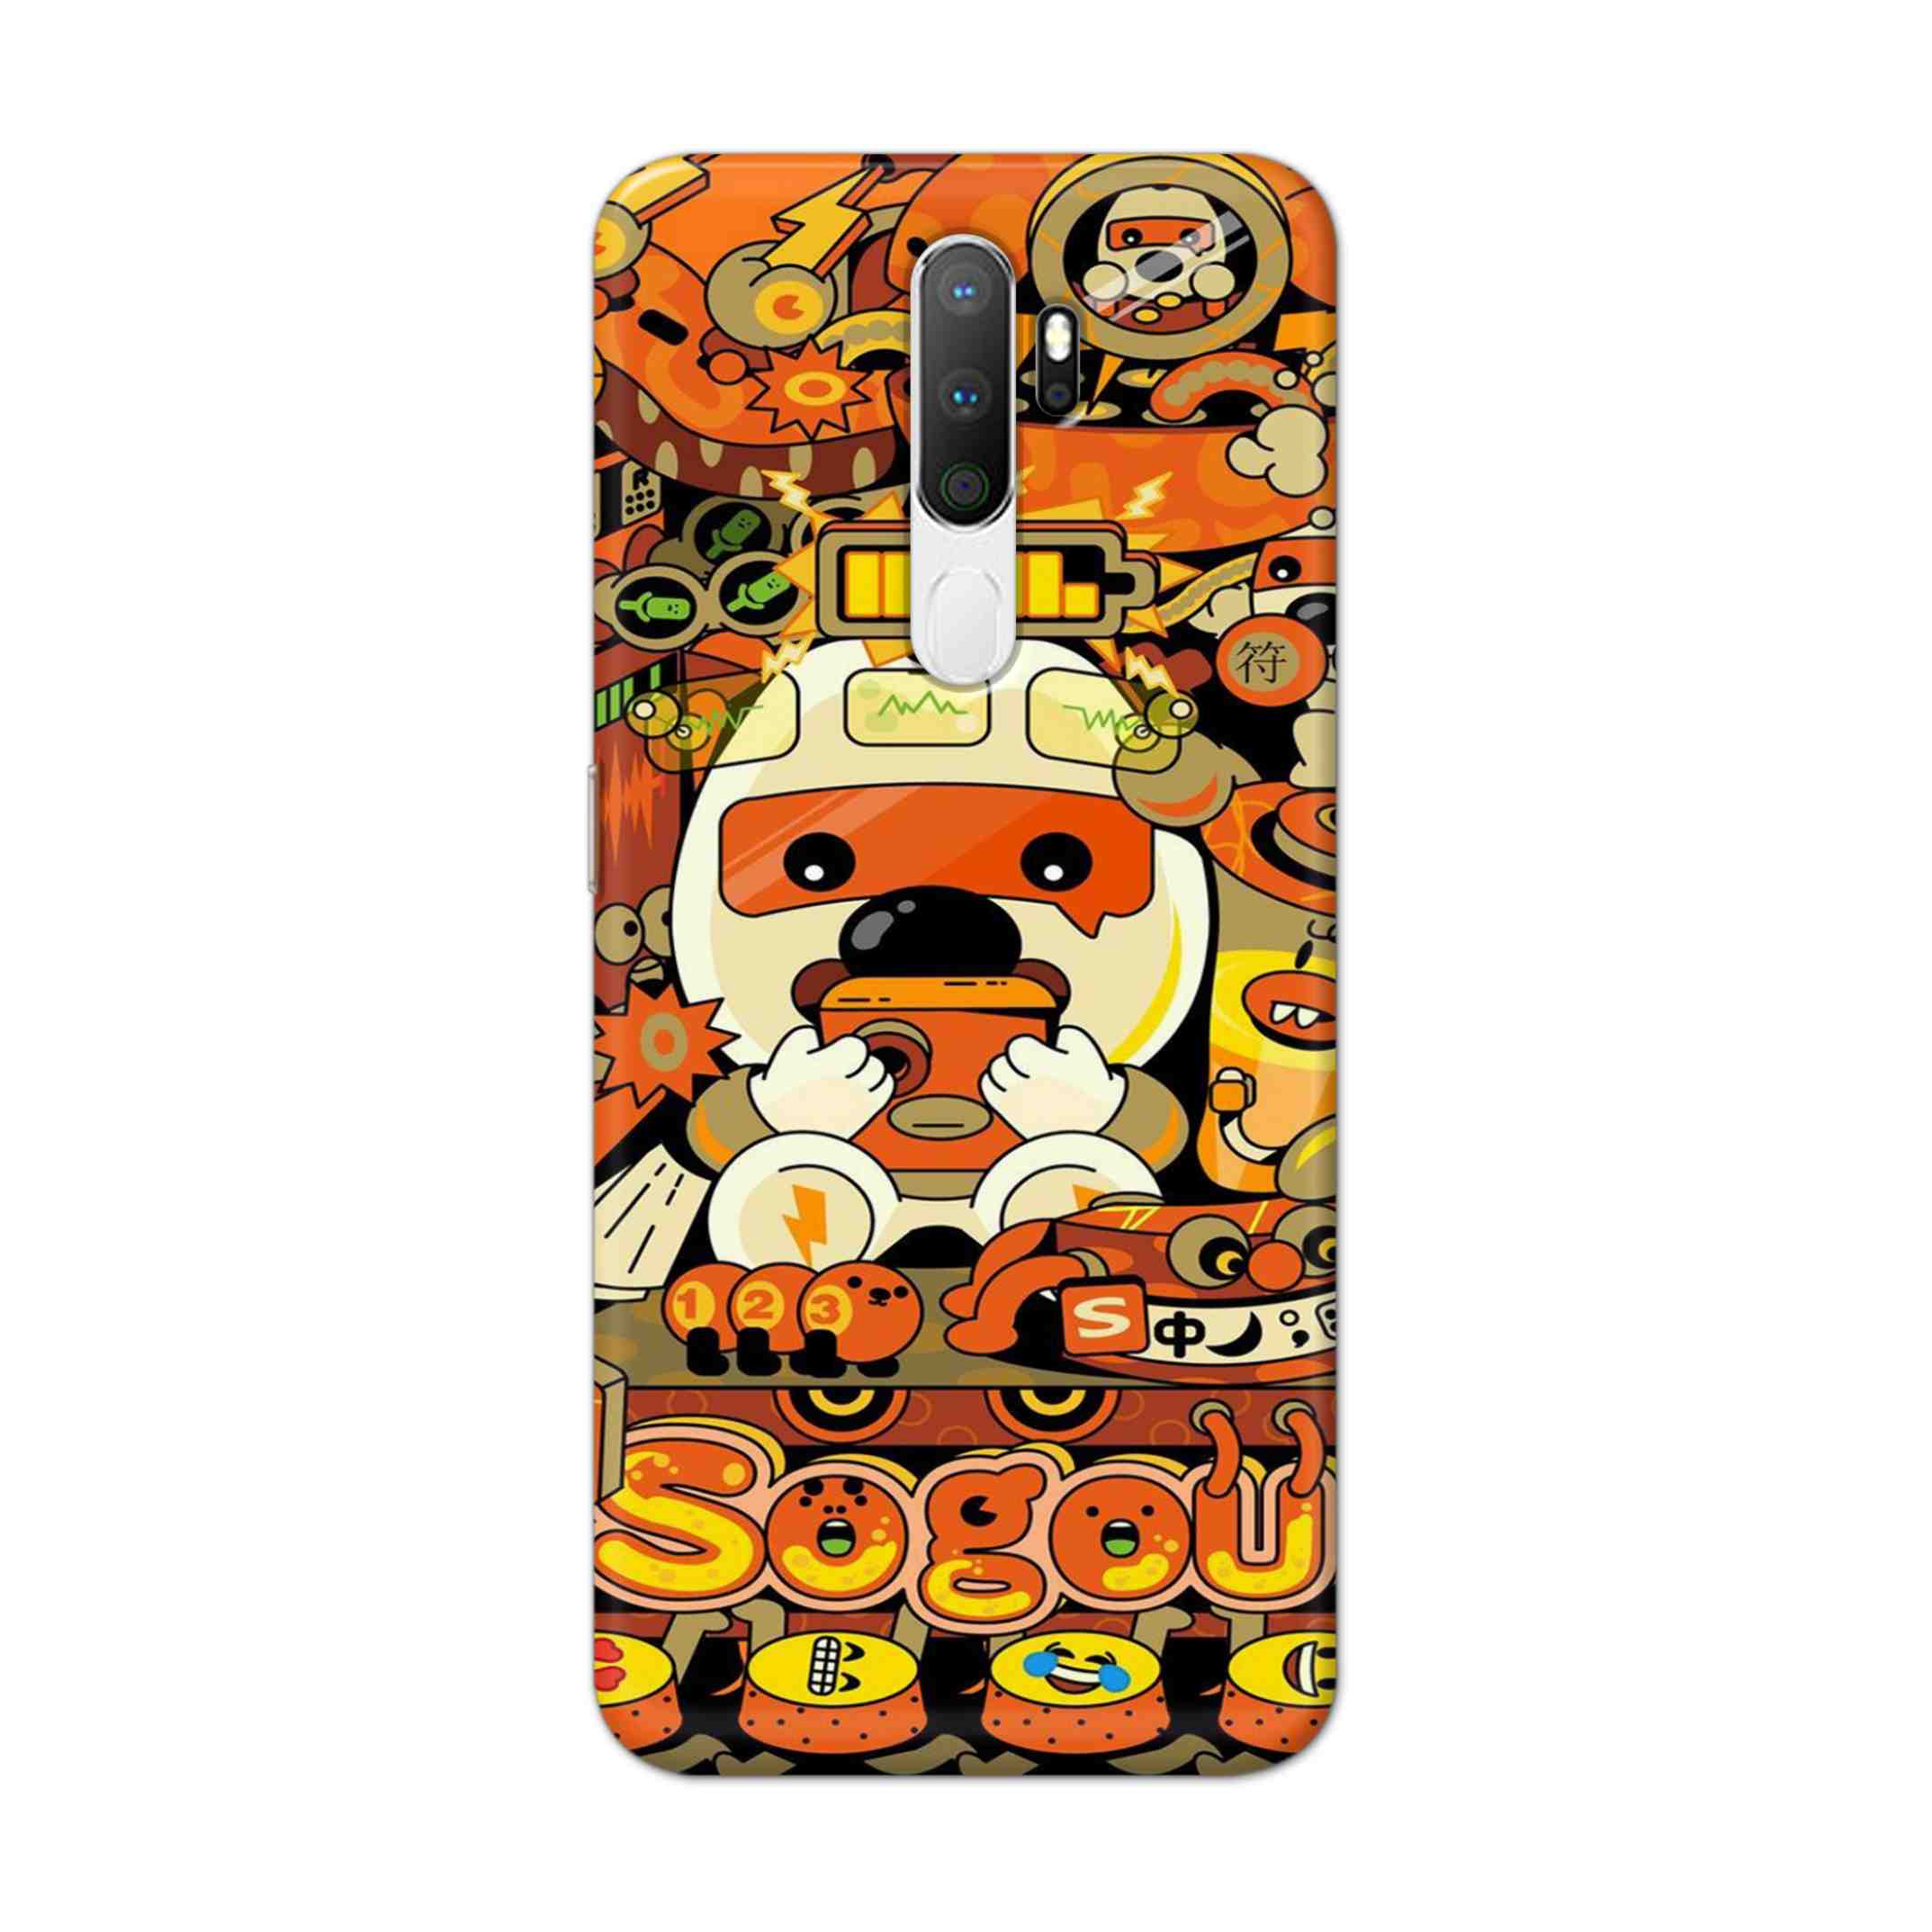 Buy Sogou Hard Back Mobile Phone Case Cover For Oppo A5 (2020) Online